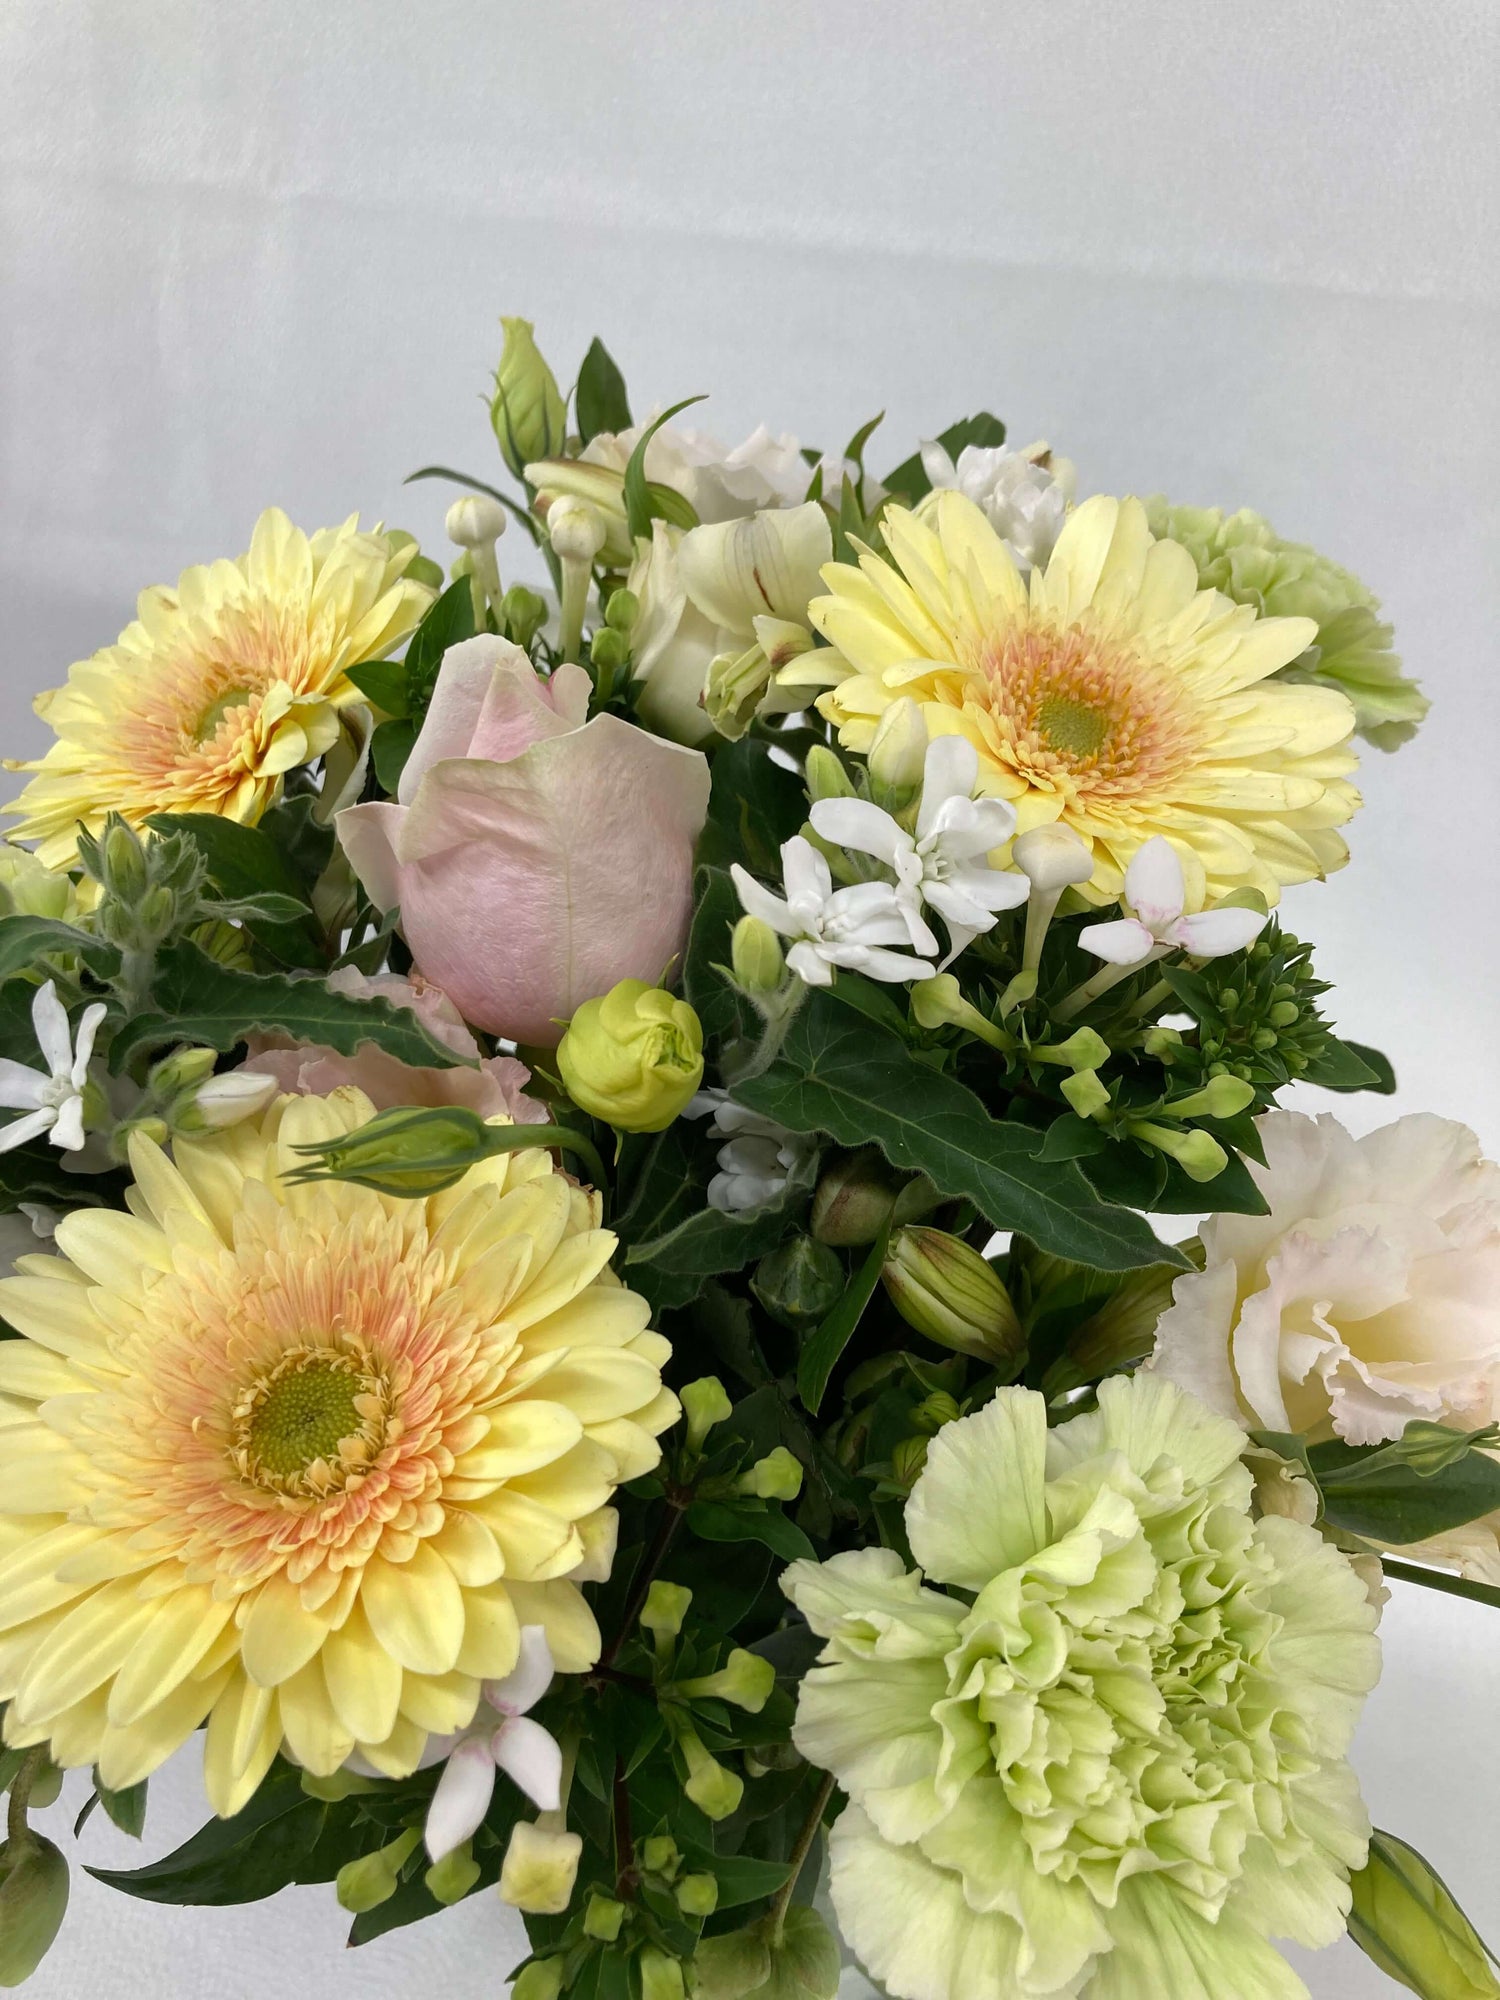 Pastel flower posy arrangement.